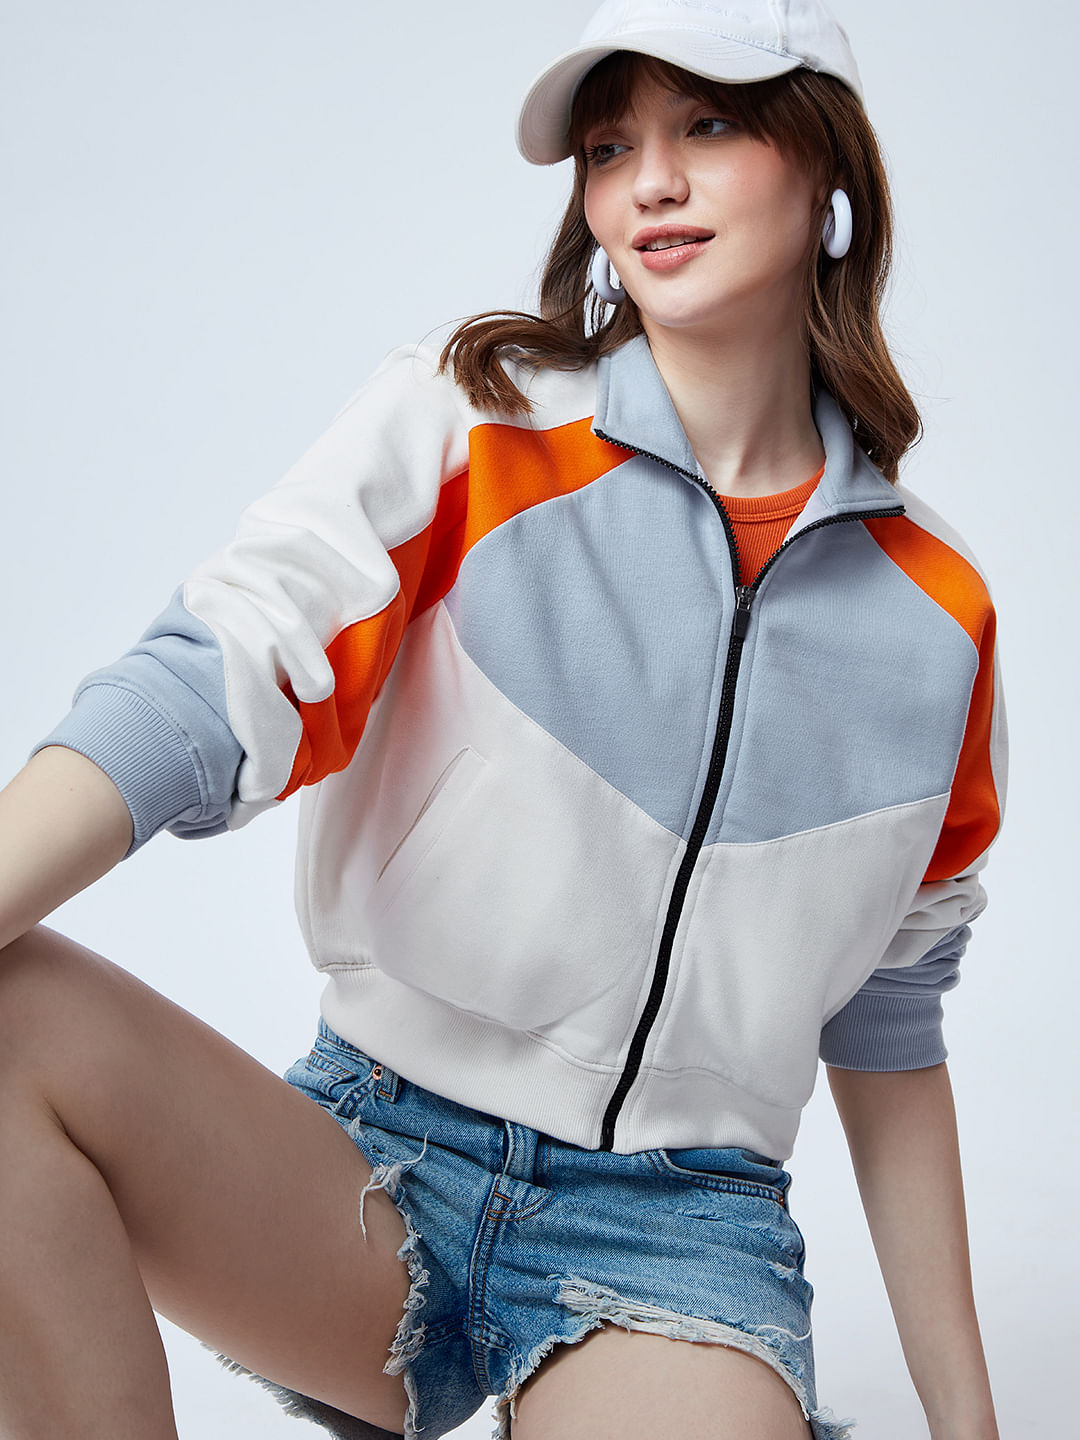 Buy Official Solids: Blue, Orange, White Colourblock Women Jacket Online